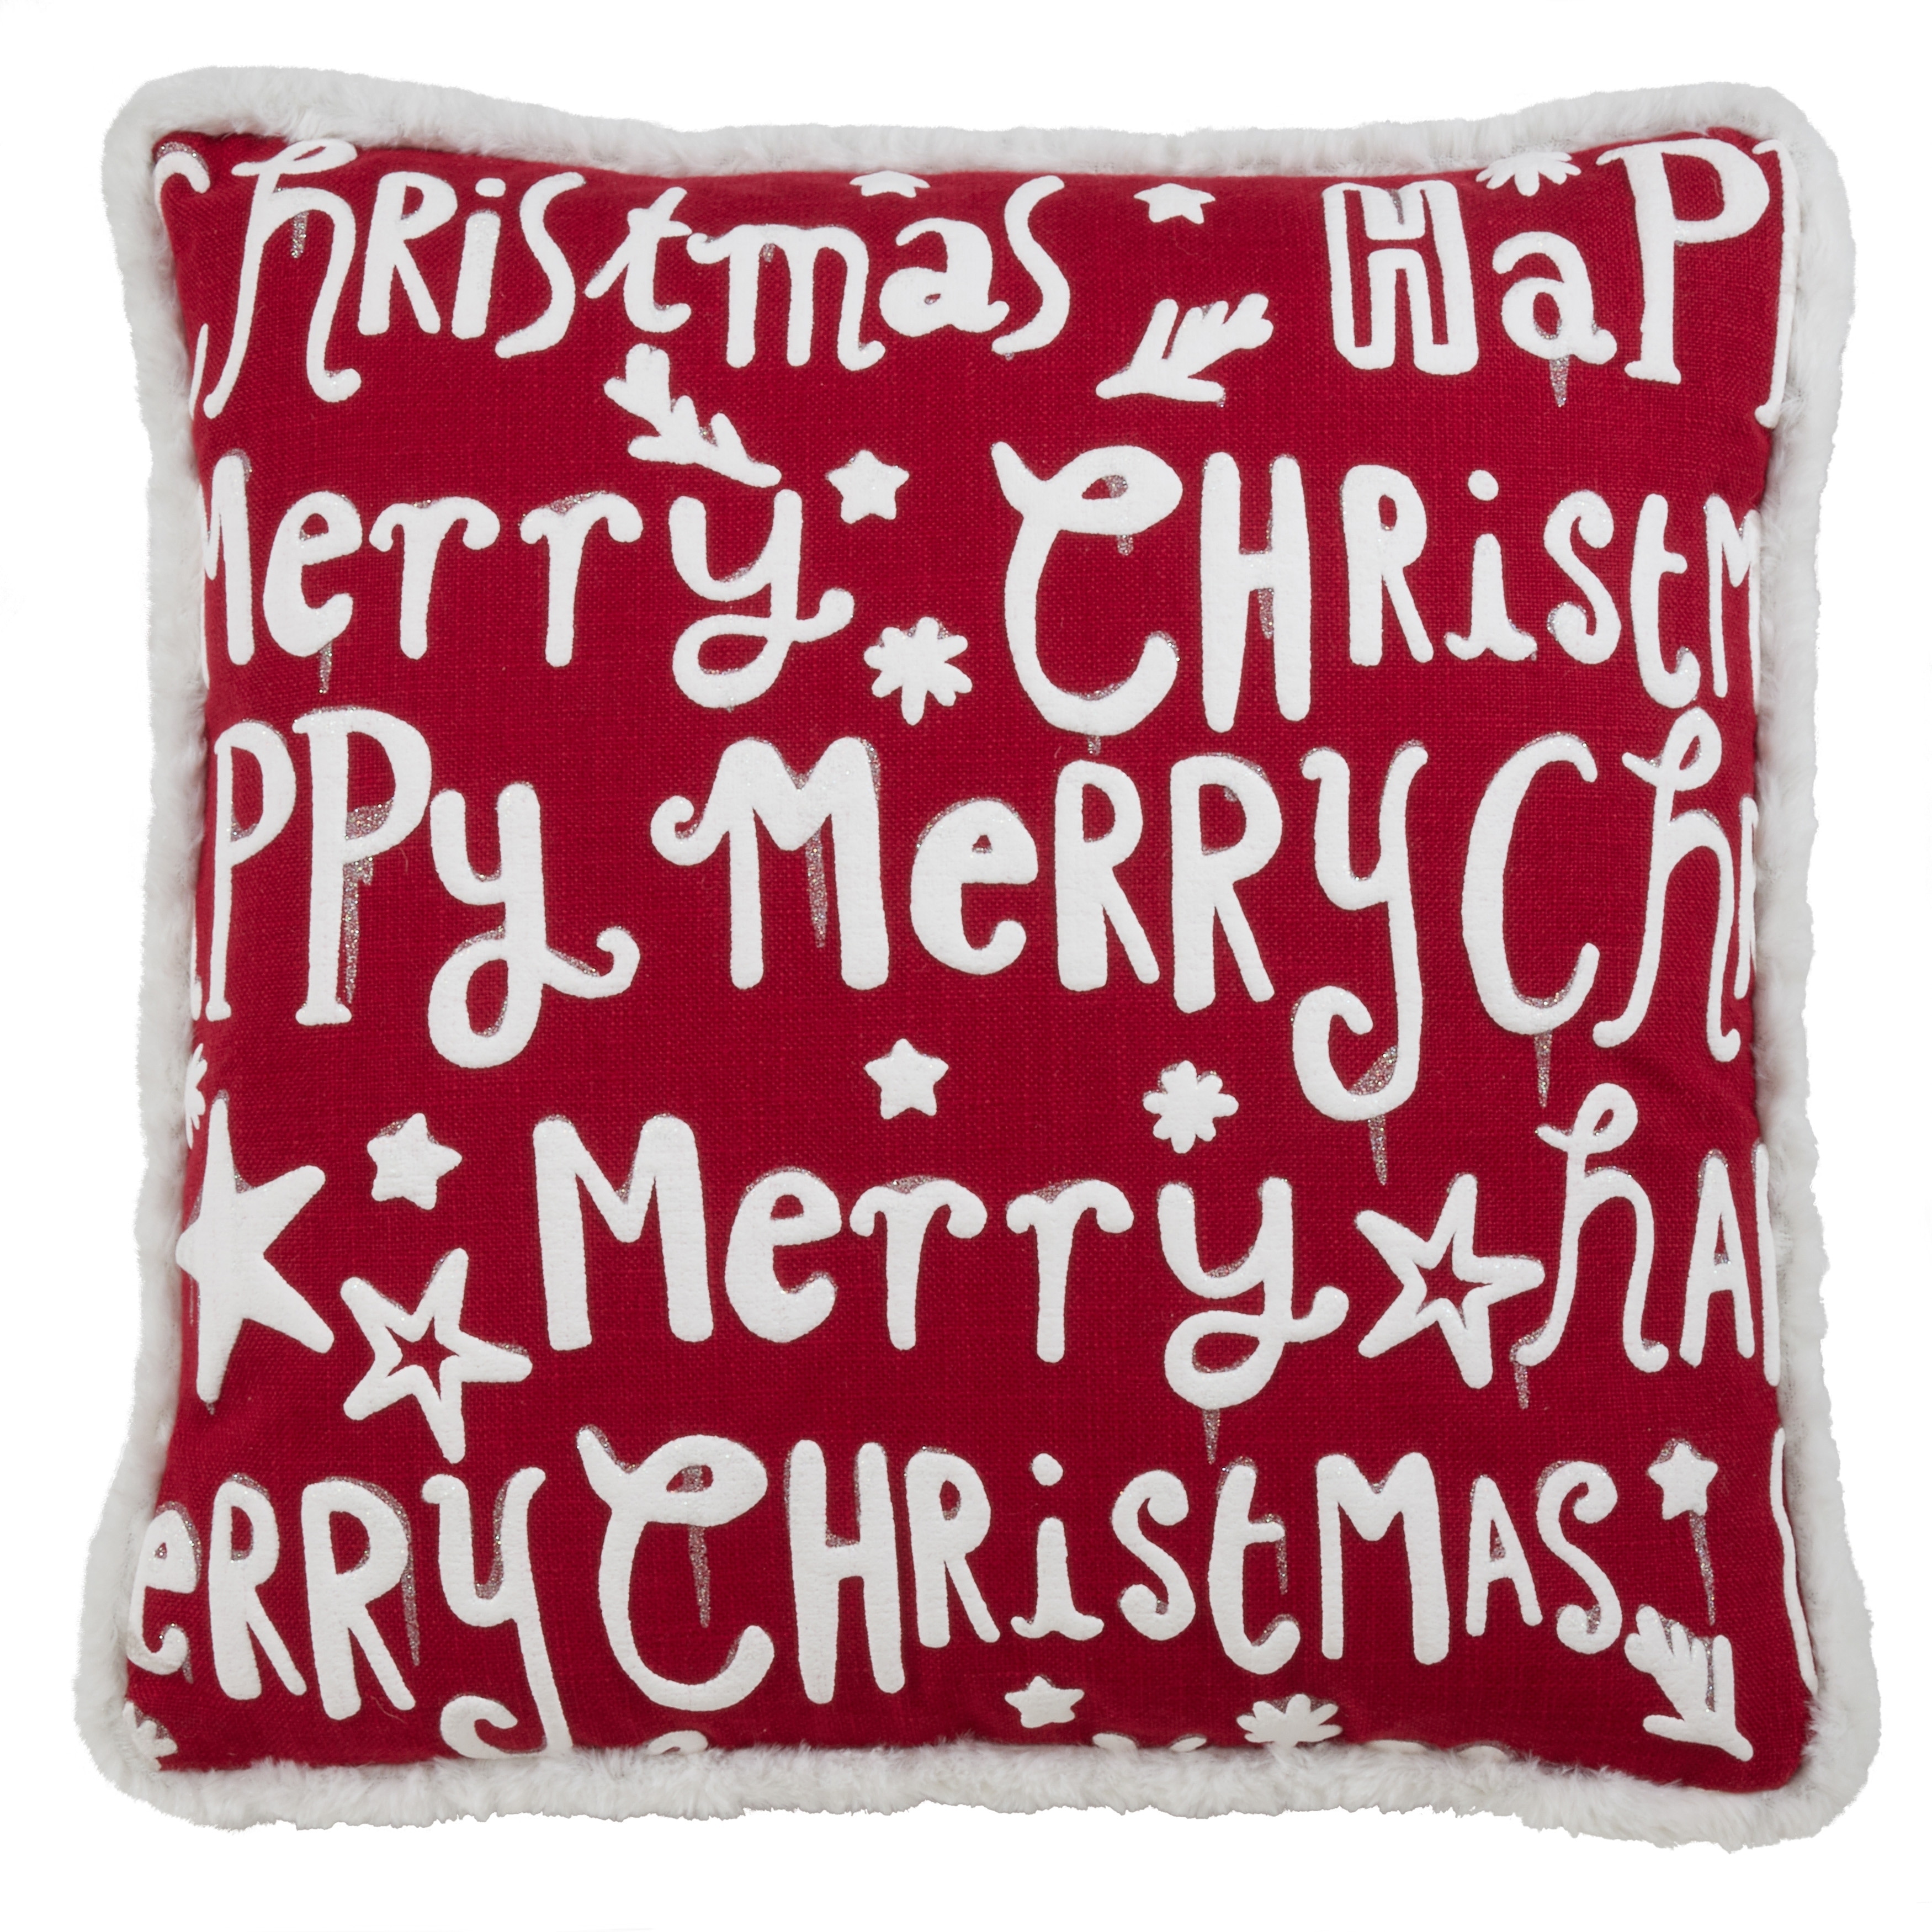 https://ak1.ostkcdn.com/images/products/29821736/Christmas-Pillow-With-Merry-Happy-Christmas-Print-7cc7f9cc-9efc-48a6-b27d-0d3ffb7d404c.jpg